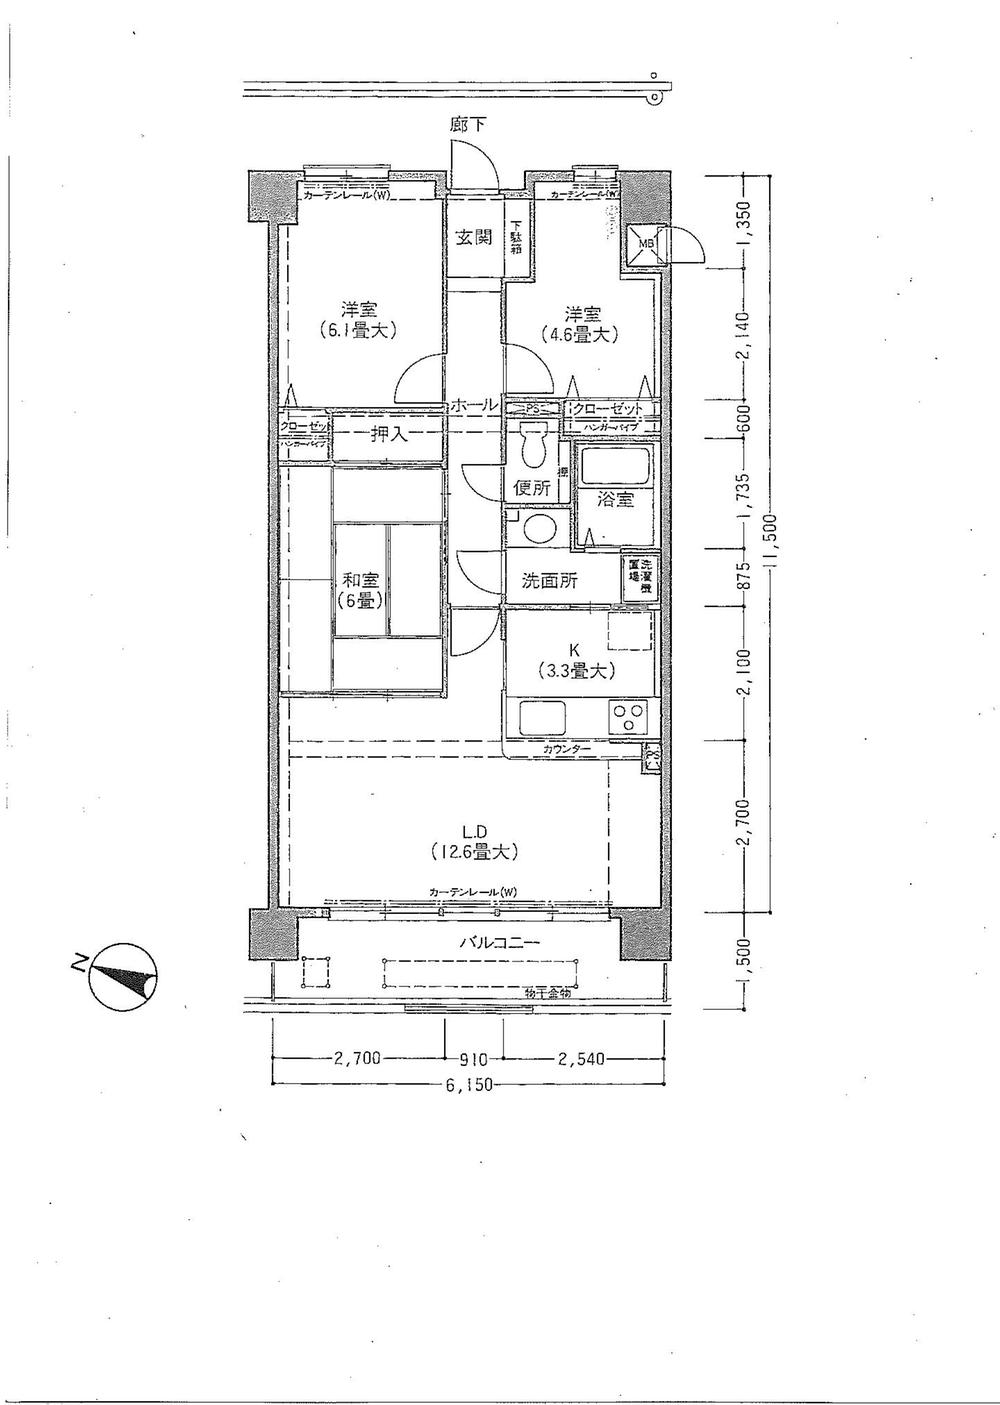 Floor plan. 3LDK, Price 9.7 million yen, Occupied area 70.32 sq m , Balcony area 9.22 sq m